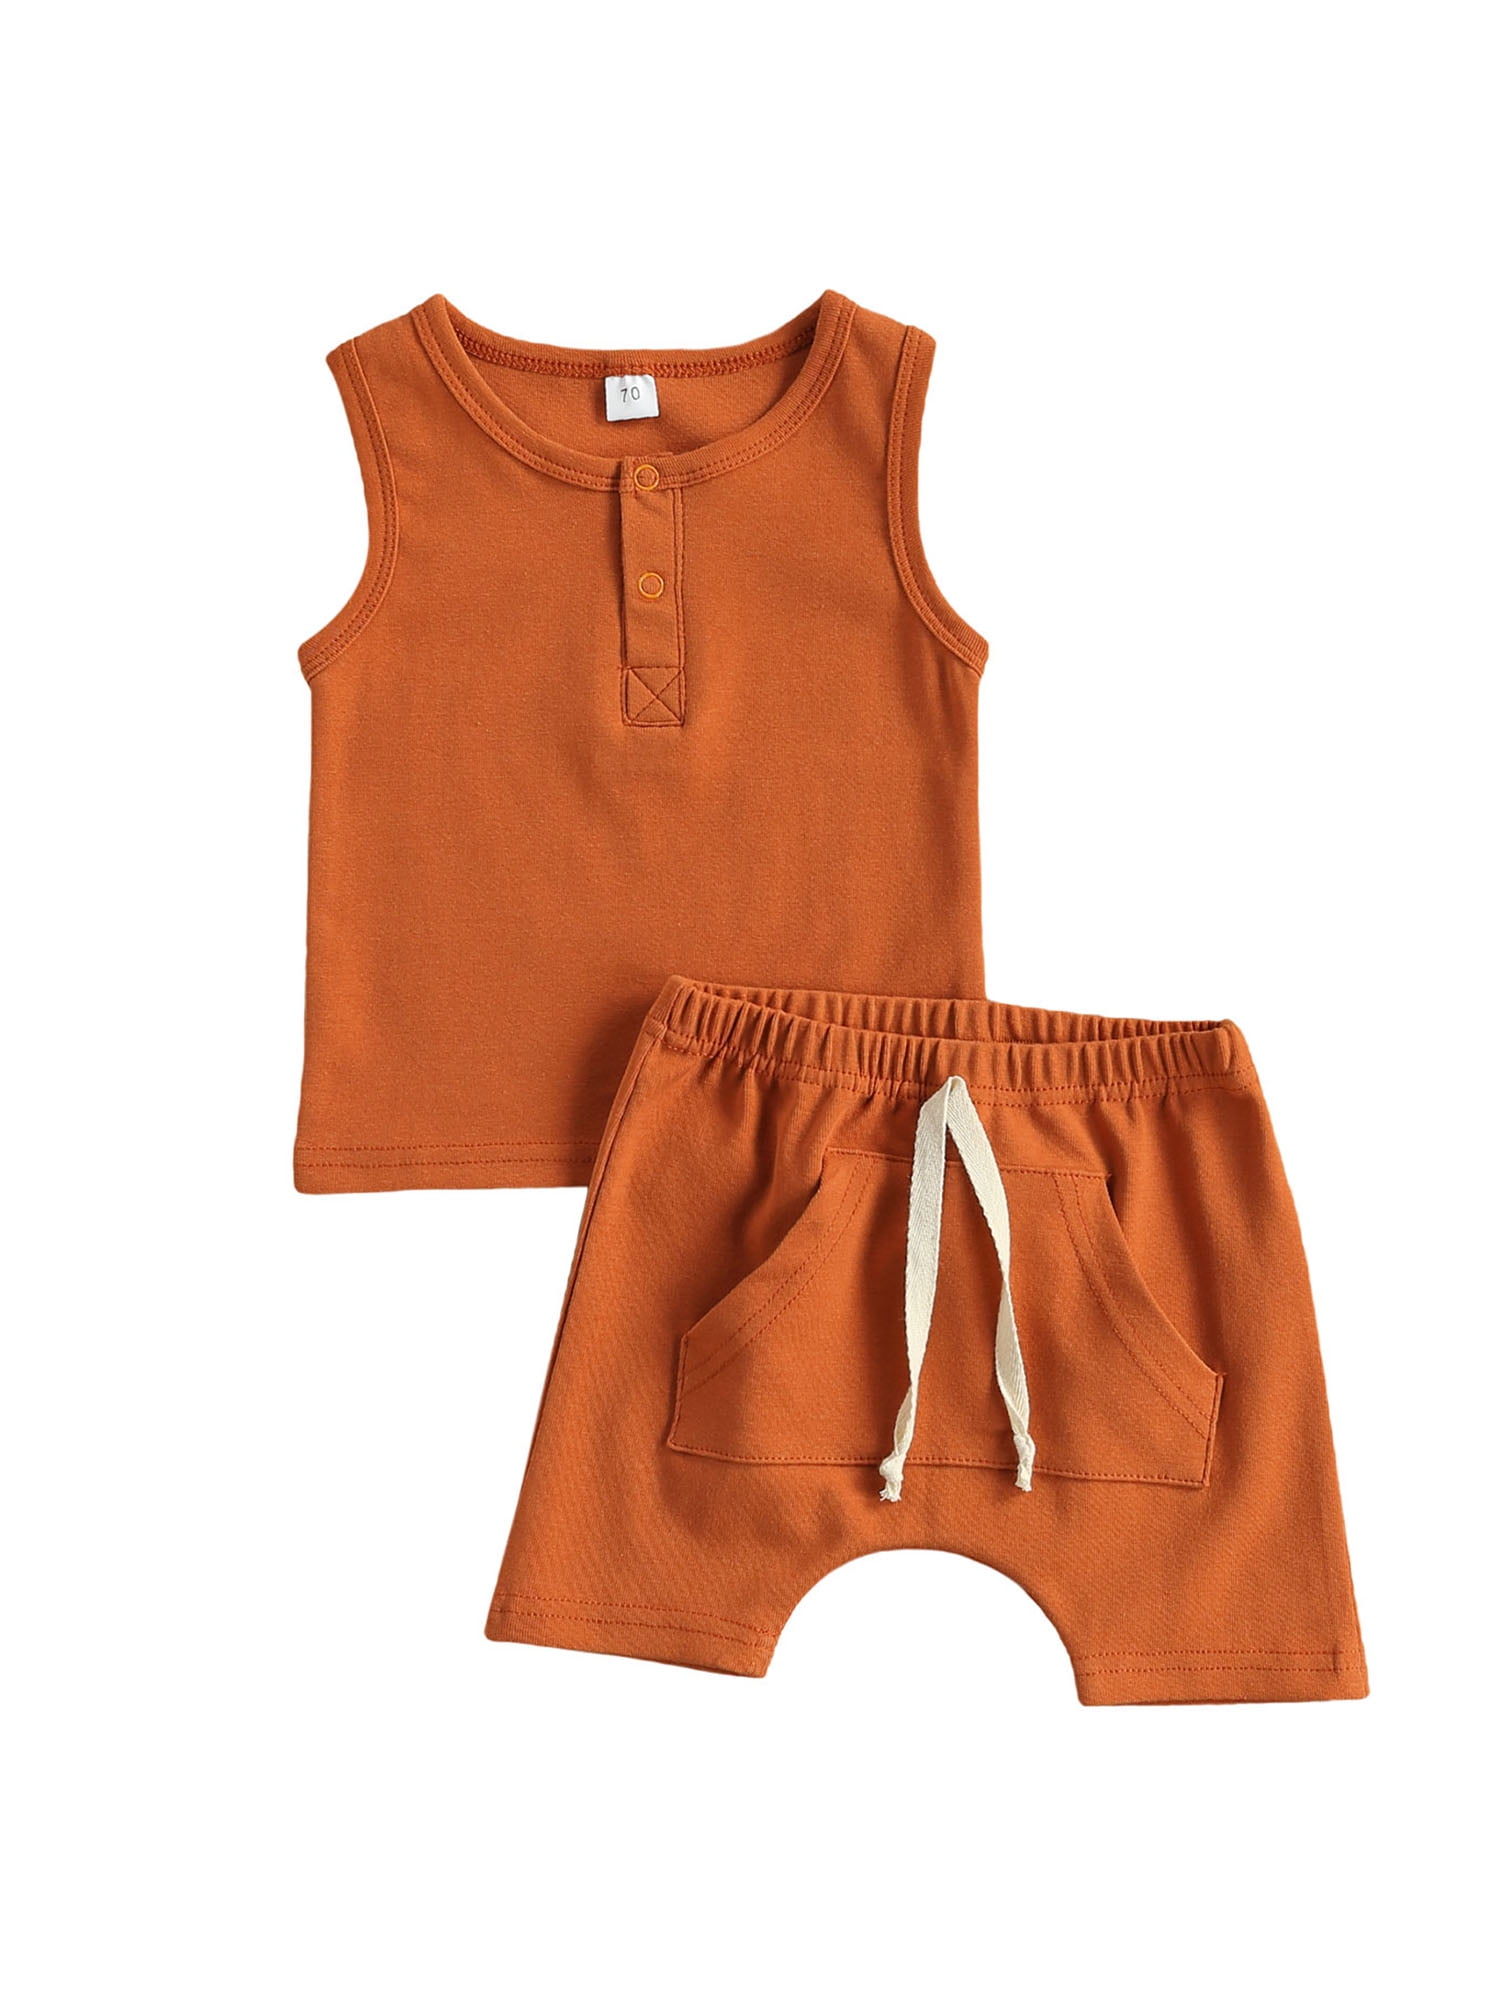 Toddler Baby Infant Boys Clothes Soild Color Vest Shorts Summer Outfit Set 